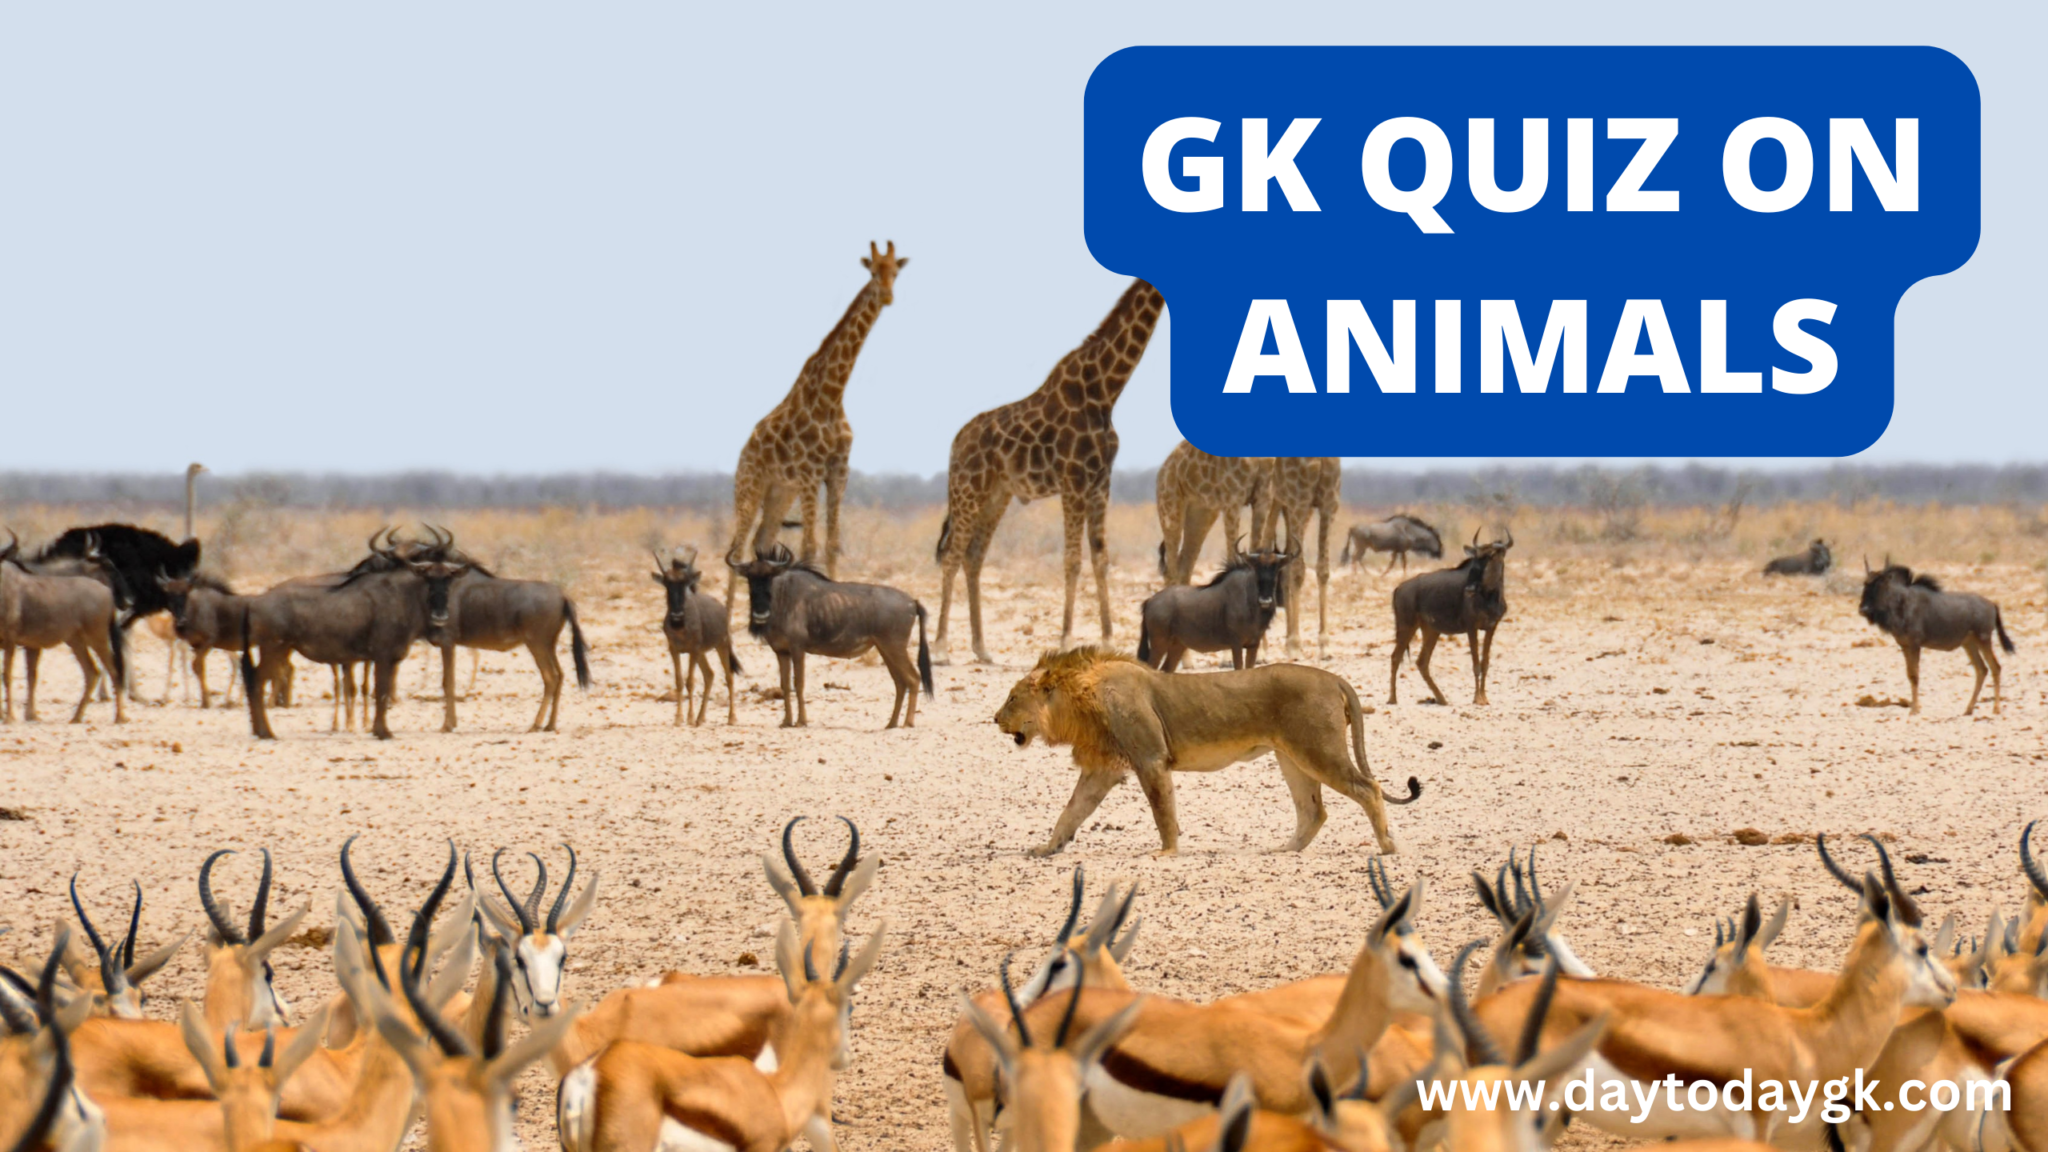 GK Quiz on Animals